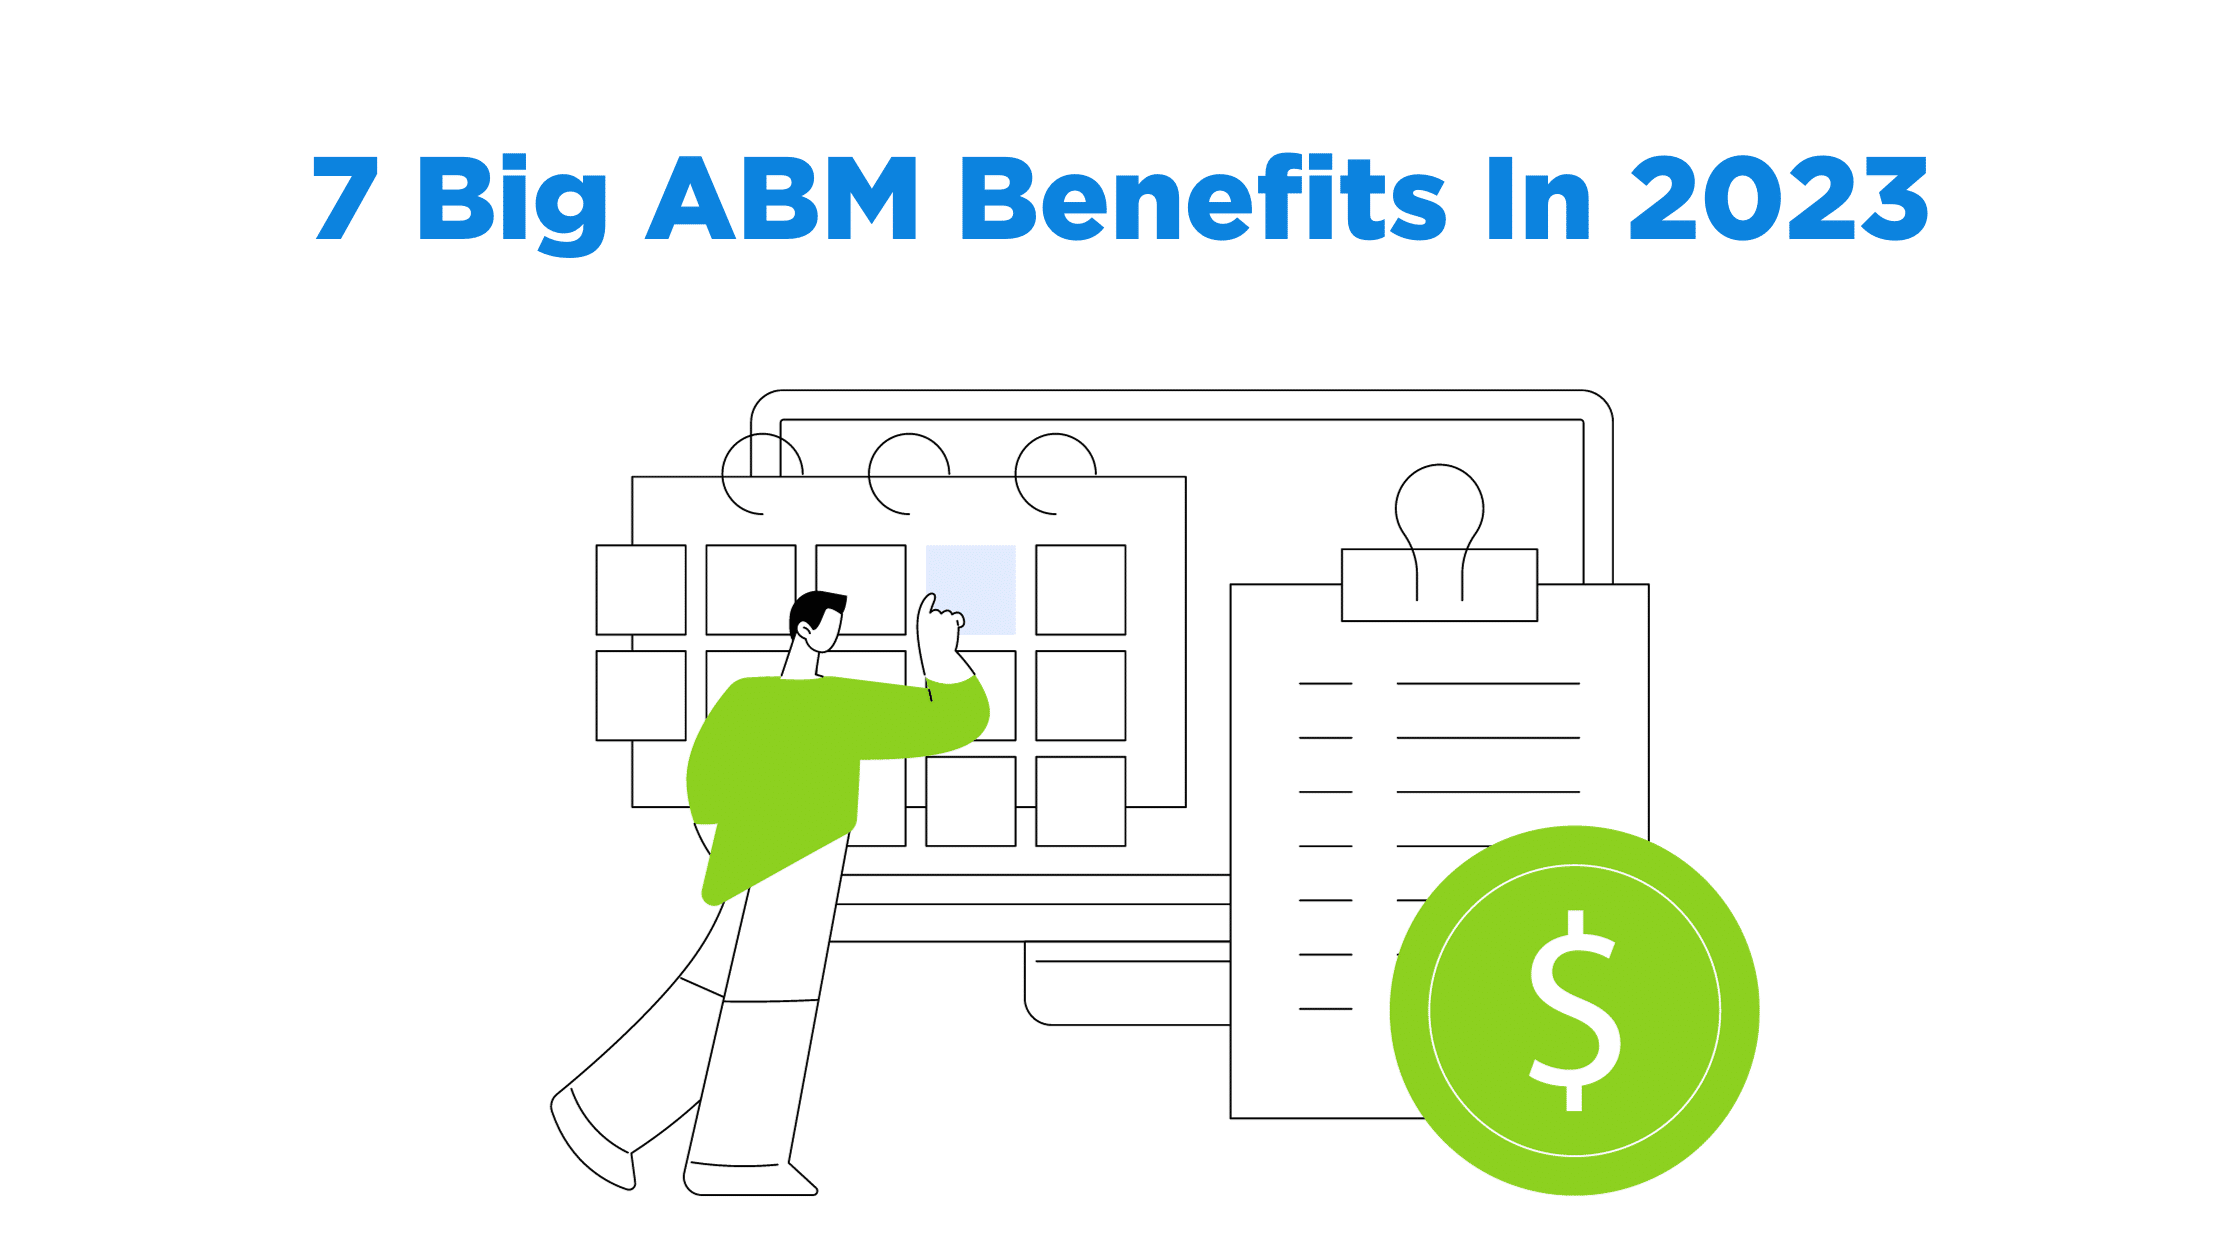 7 Big ABM Benefits In 2023